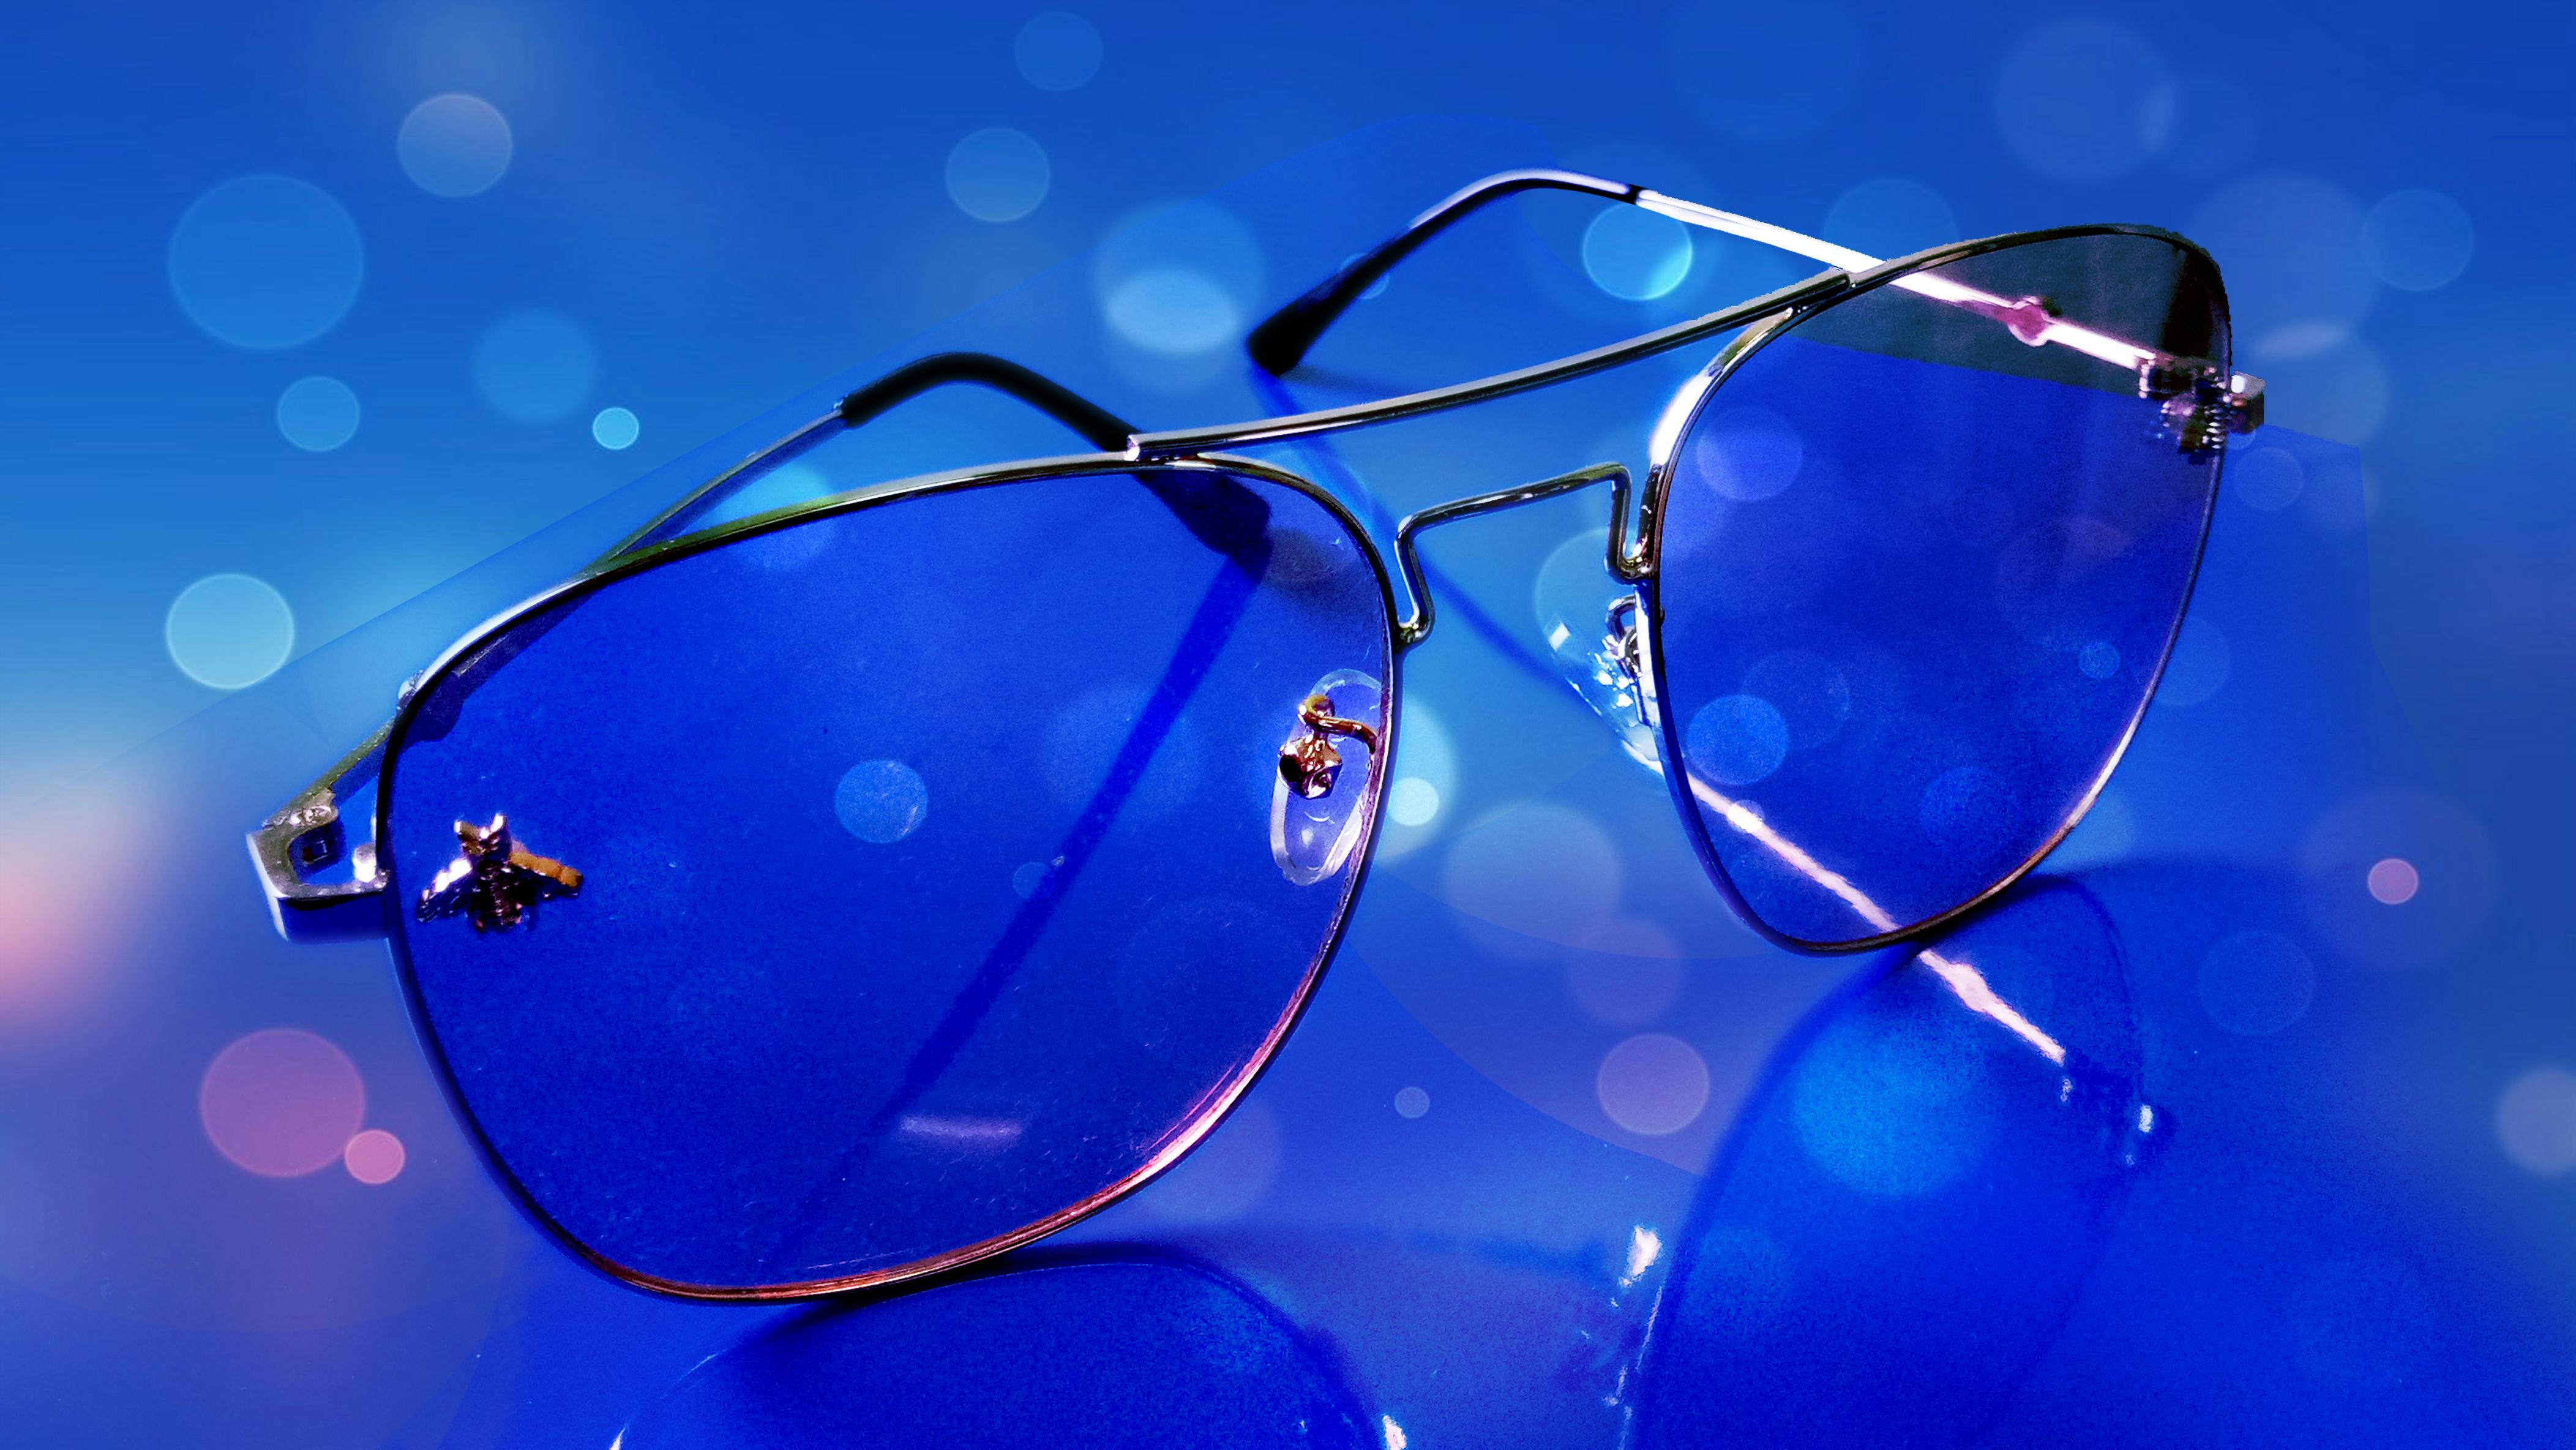 Free stock photo of blue background, sun glasses